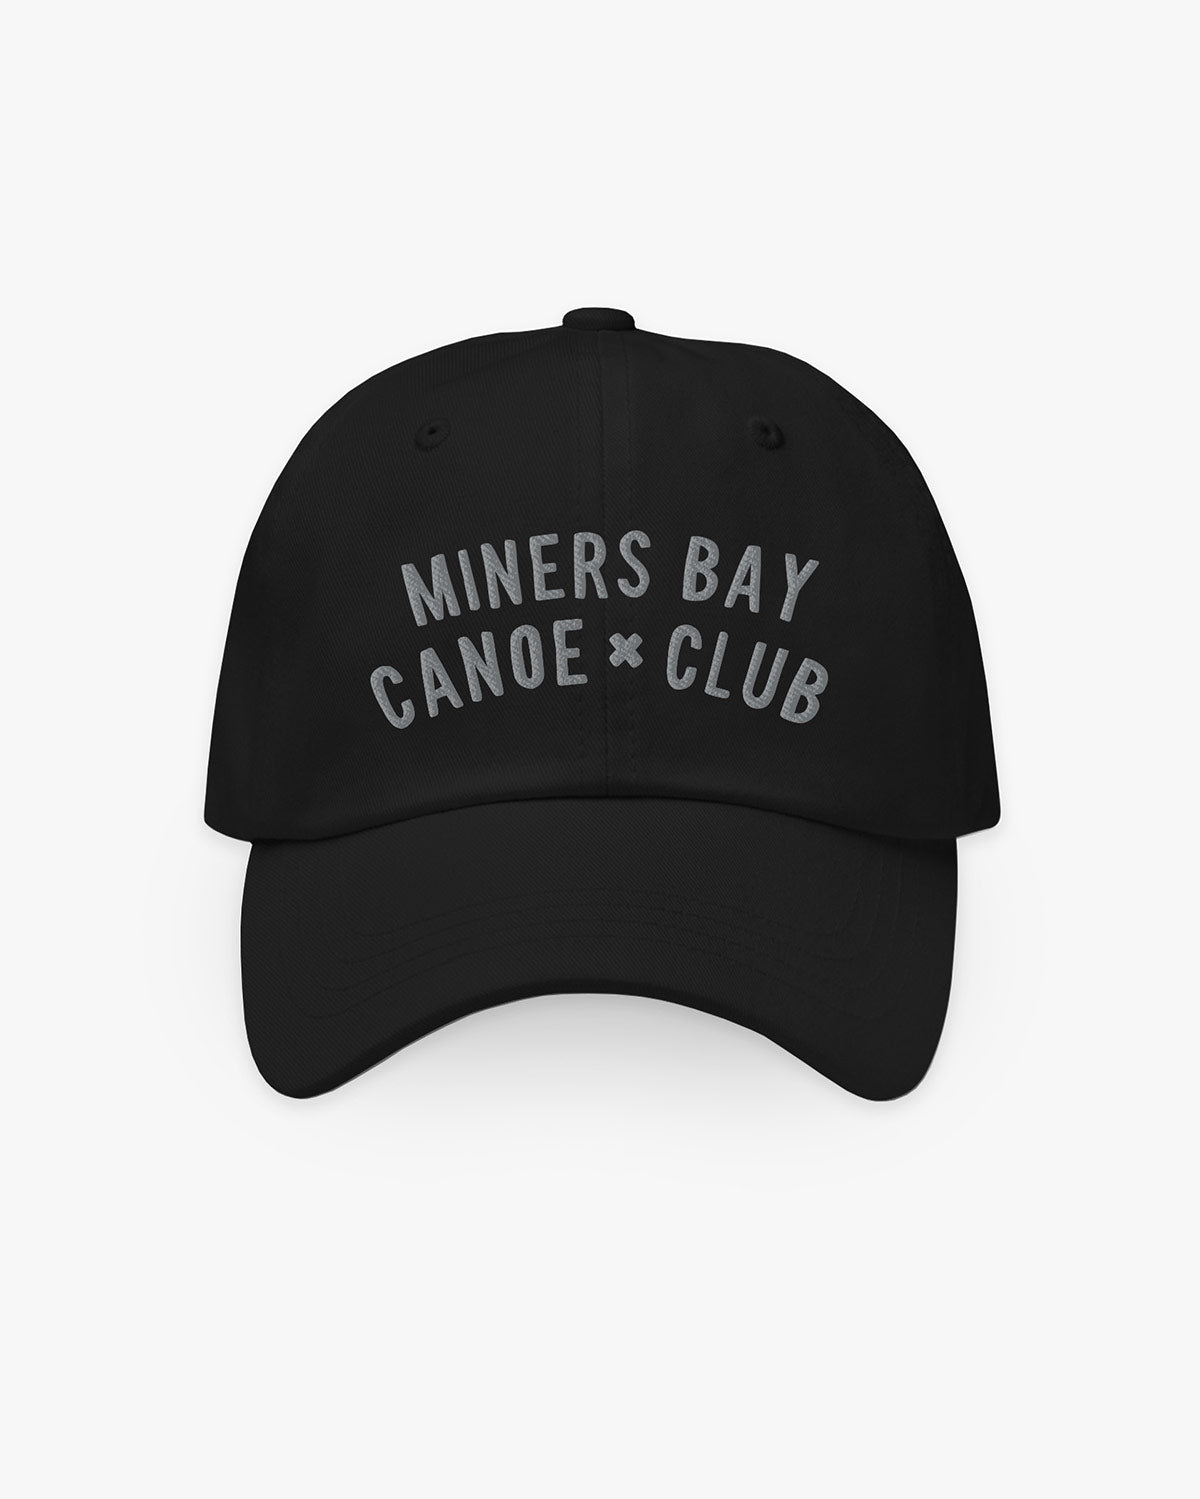 Canoe Club - Miners Bay - Hat